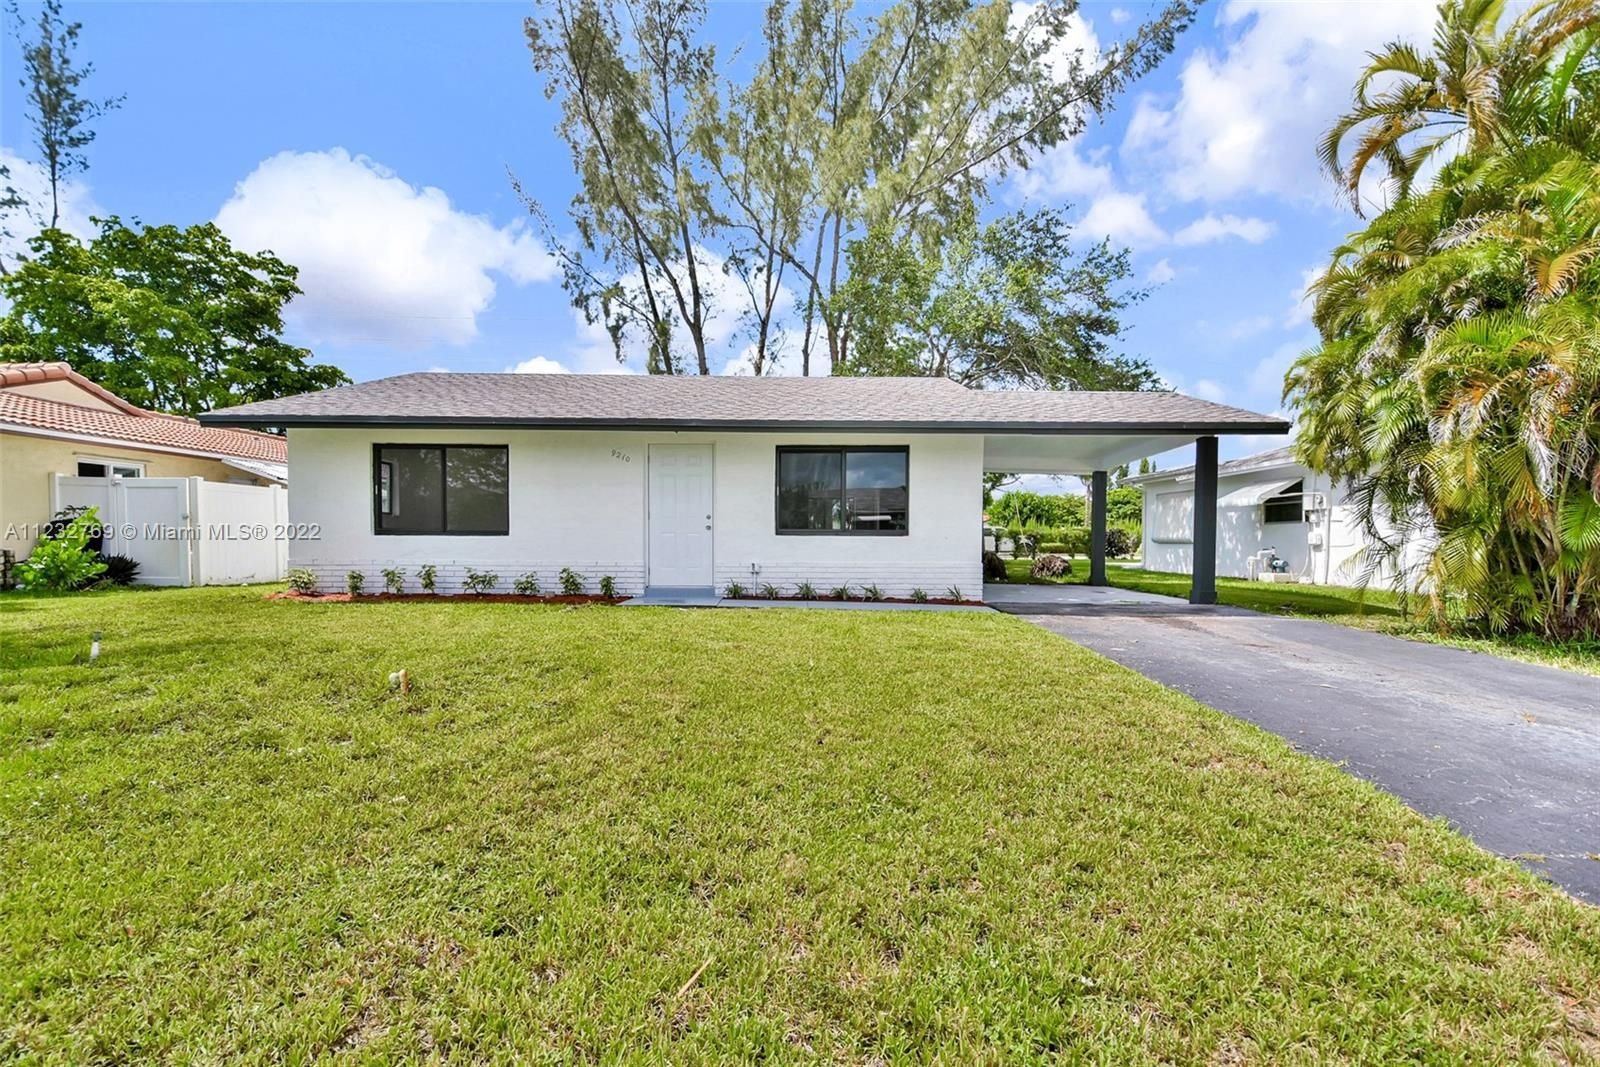 Real estate property located at 9210 81st Ct, Broward County, Tamarac, FL